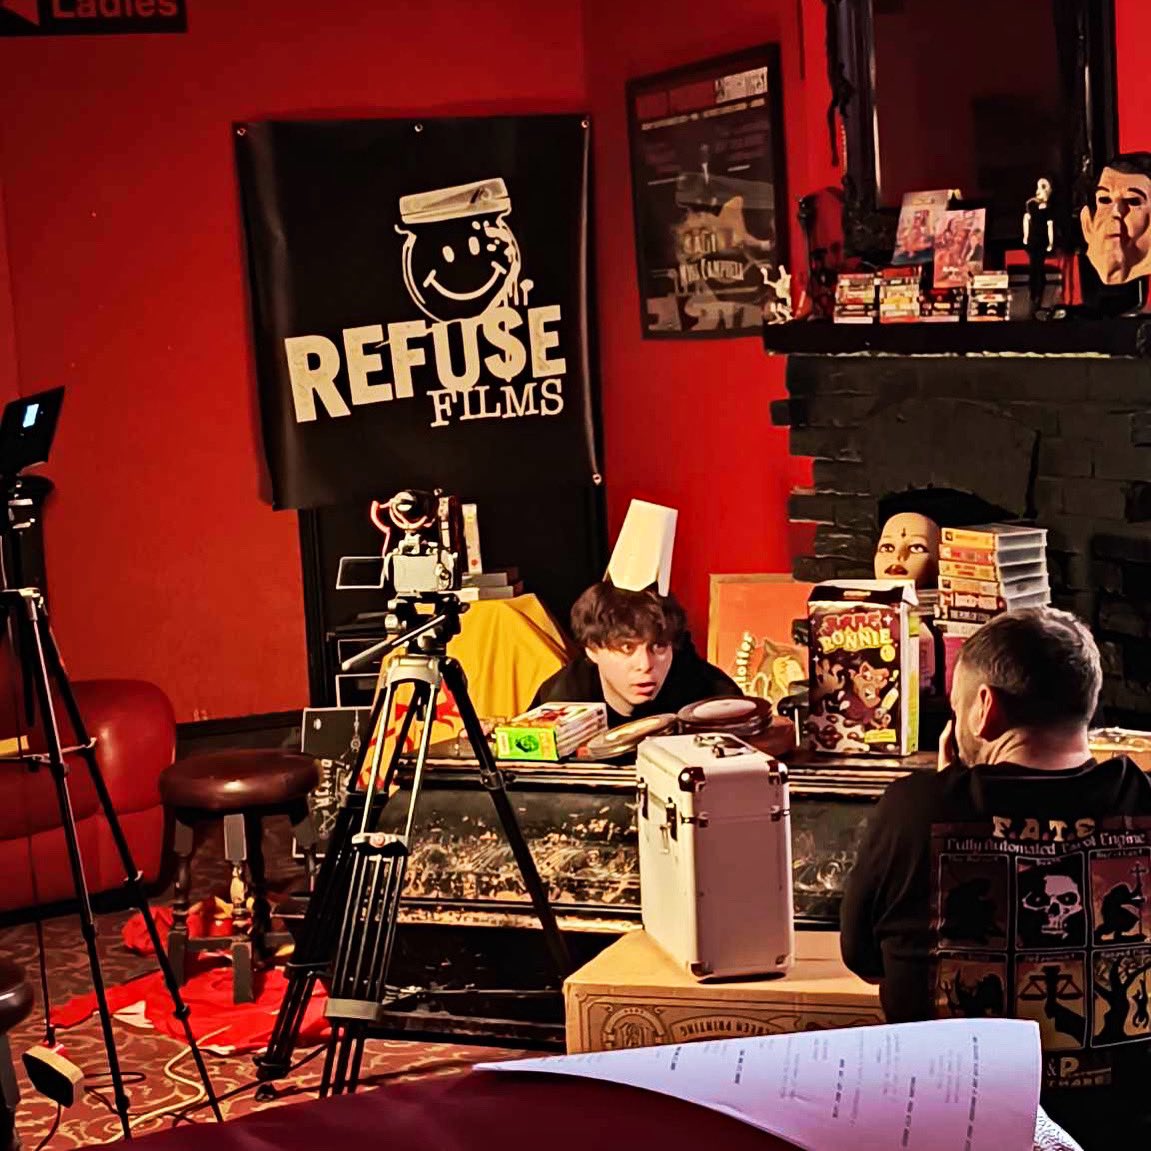 Filming promo material for Refuse Films @bellarrich @Troma_Team #MilaK